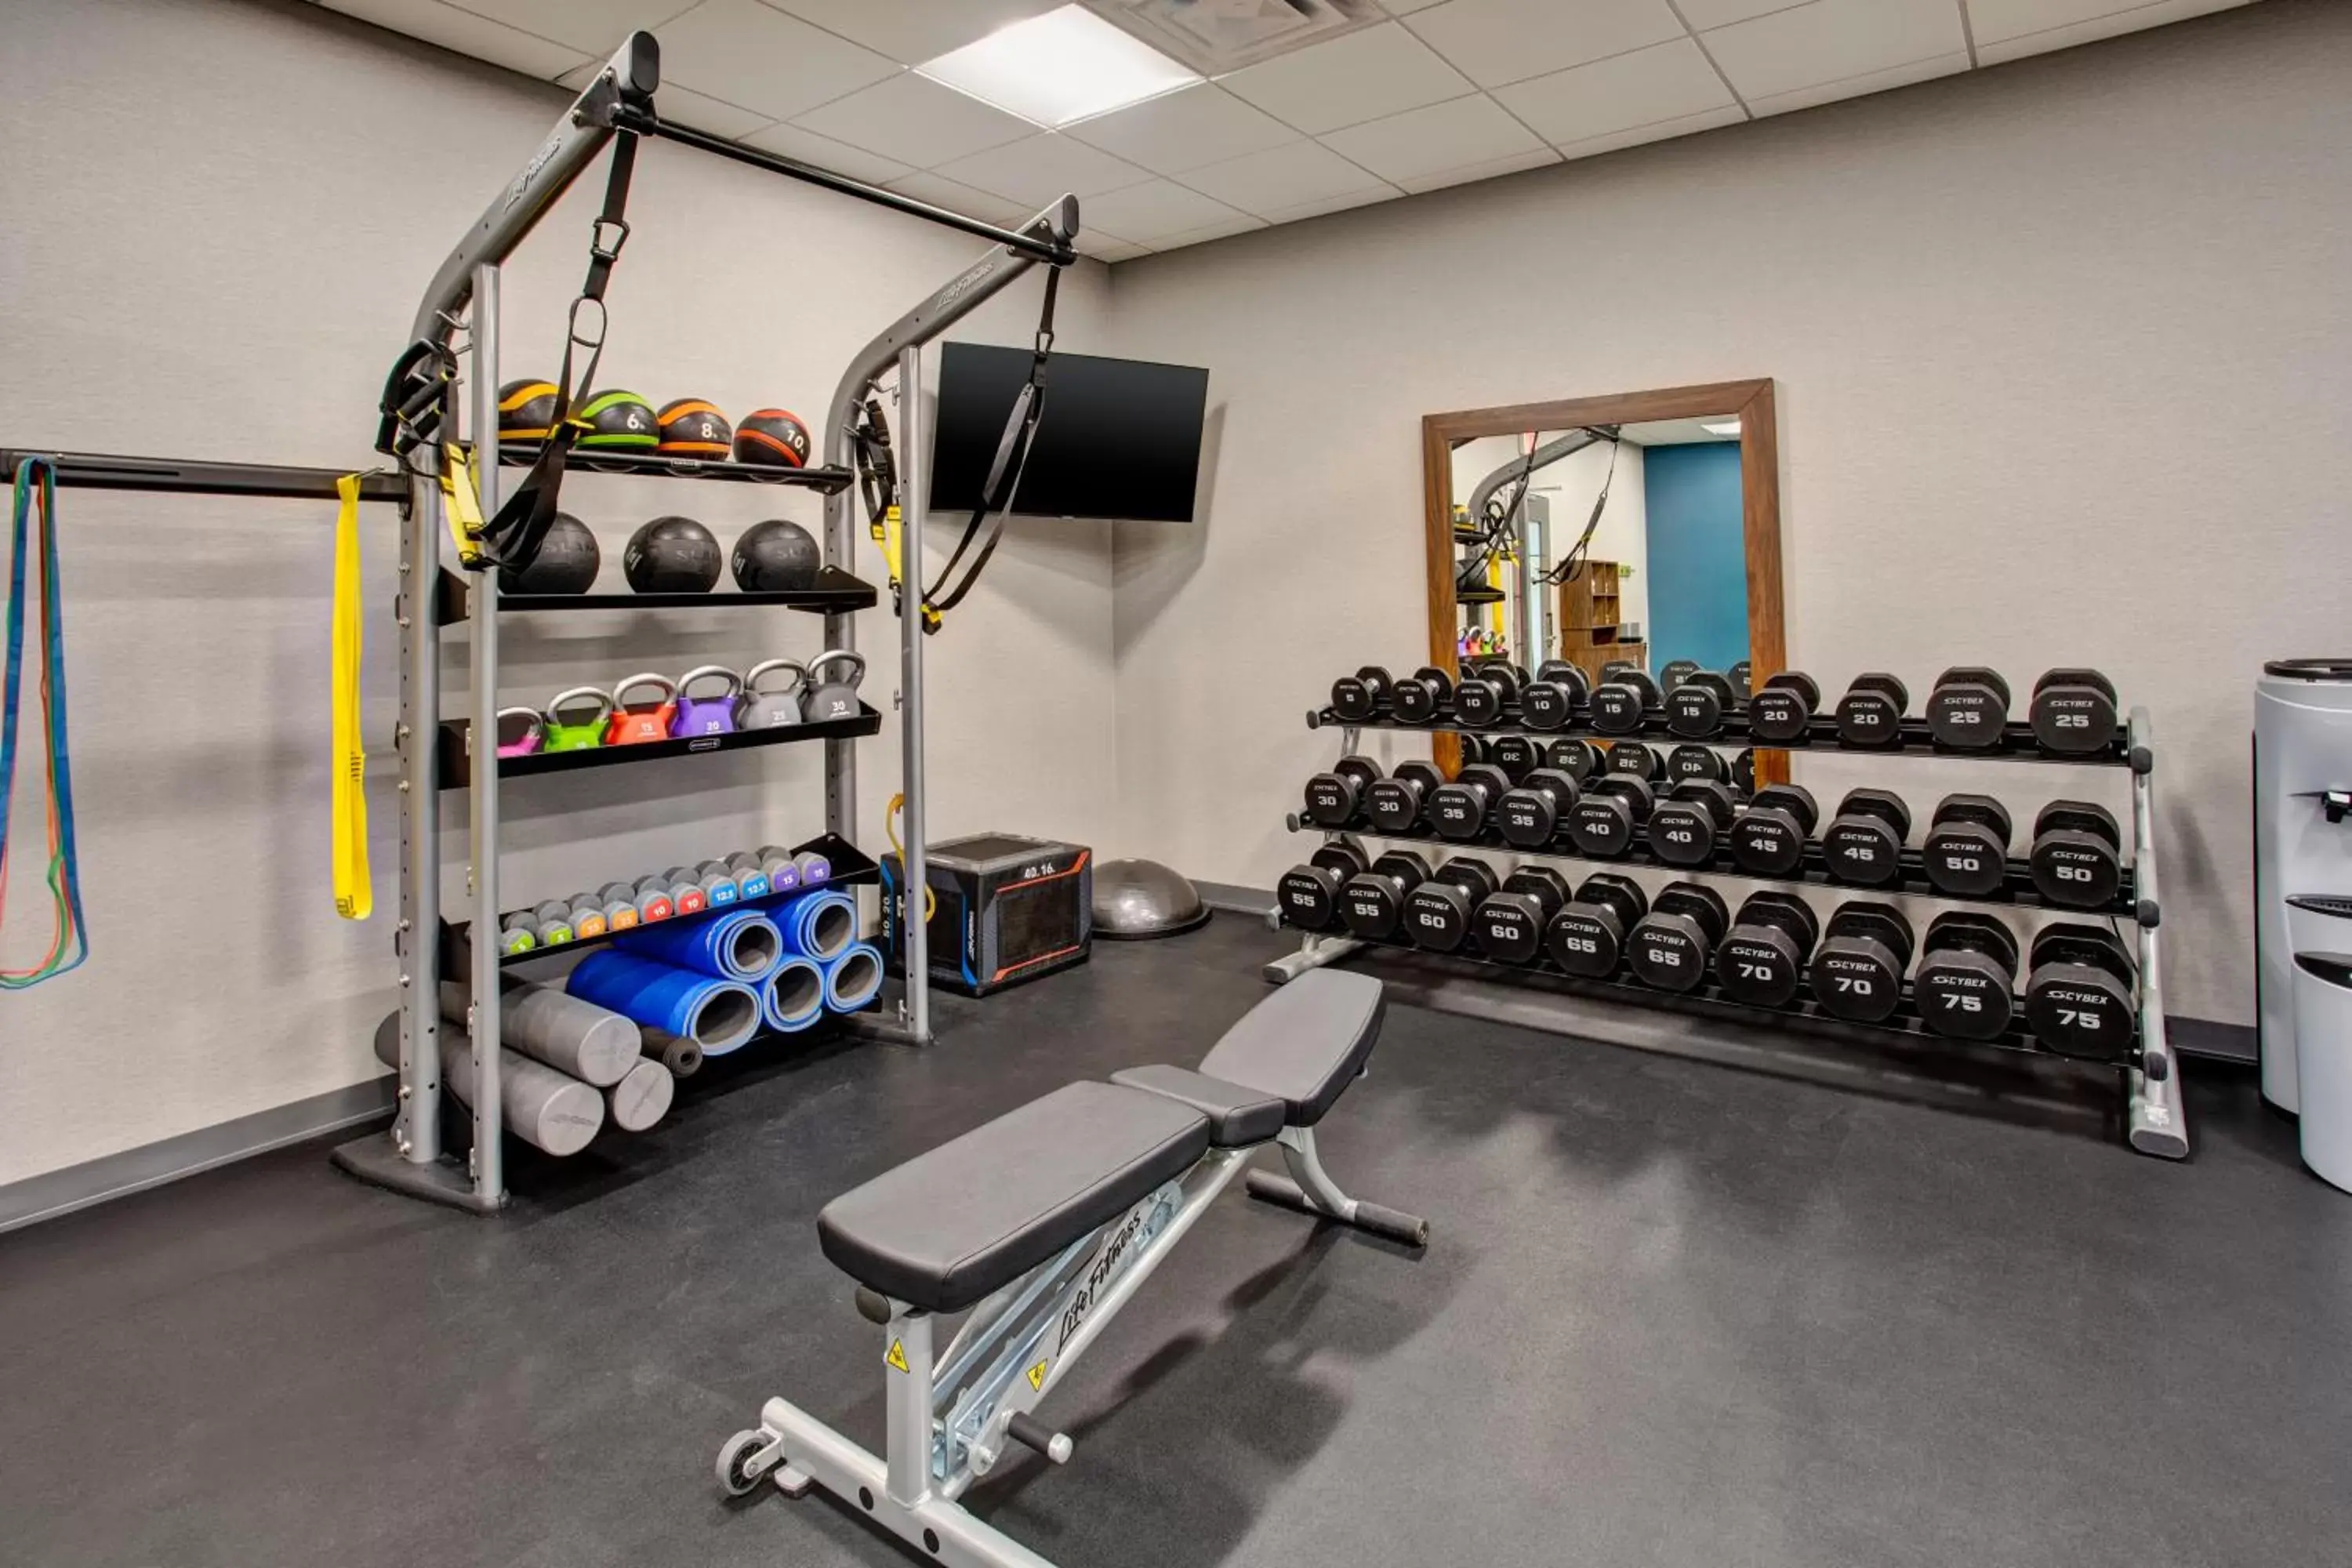 Fitness centre/facilities, Fitness Center/Facilities in Hampton Inn Paris, Tn